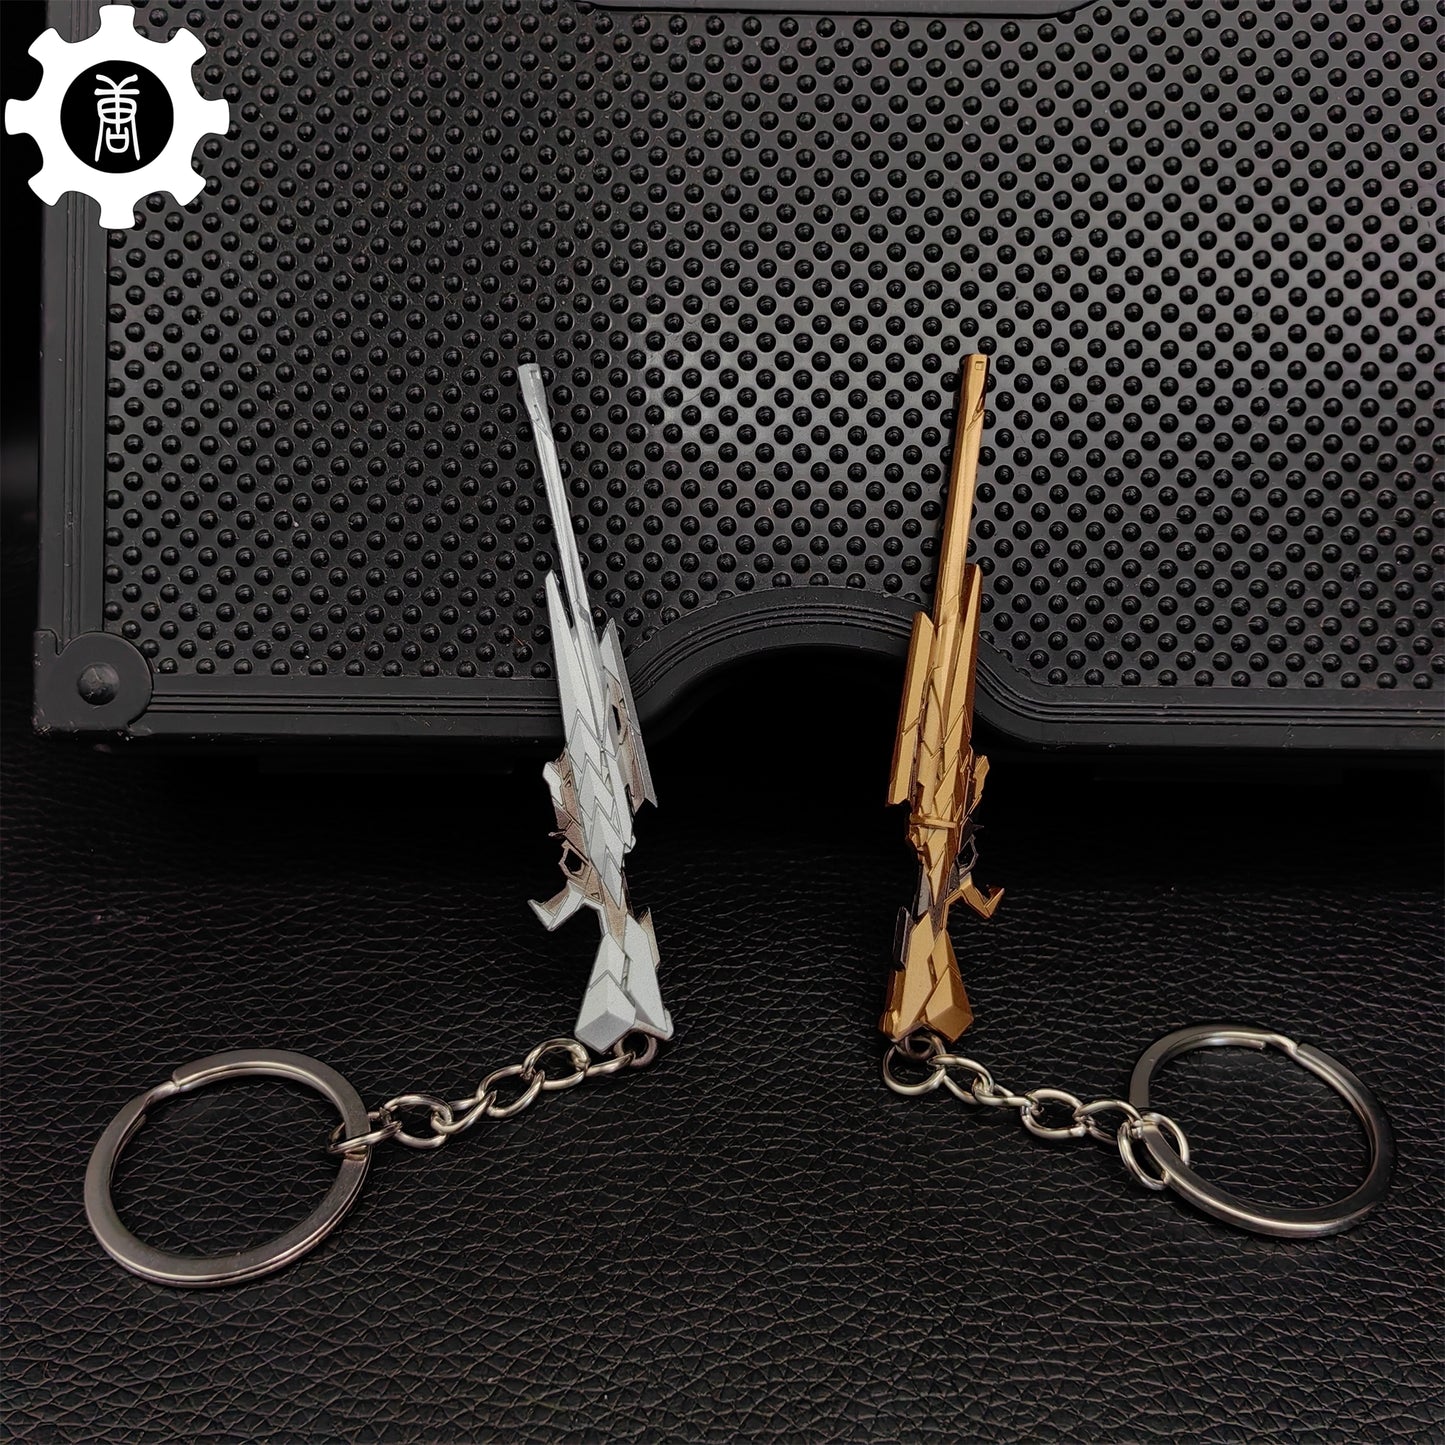 Metal Araxys Operator Gun Tiny Keychain Pendant